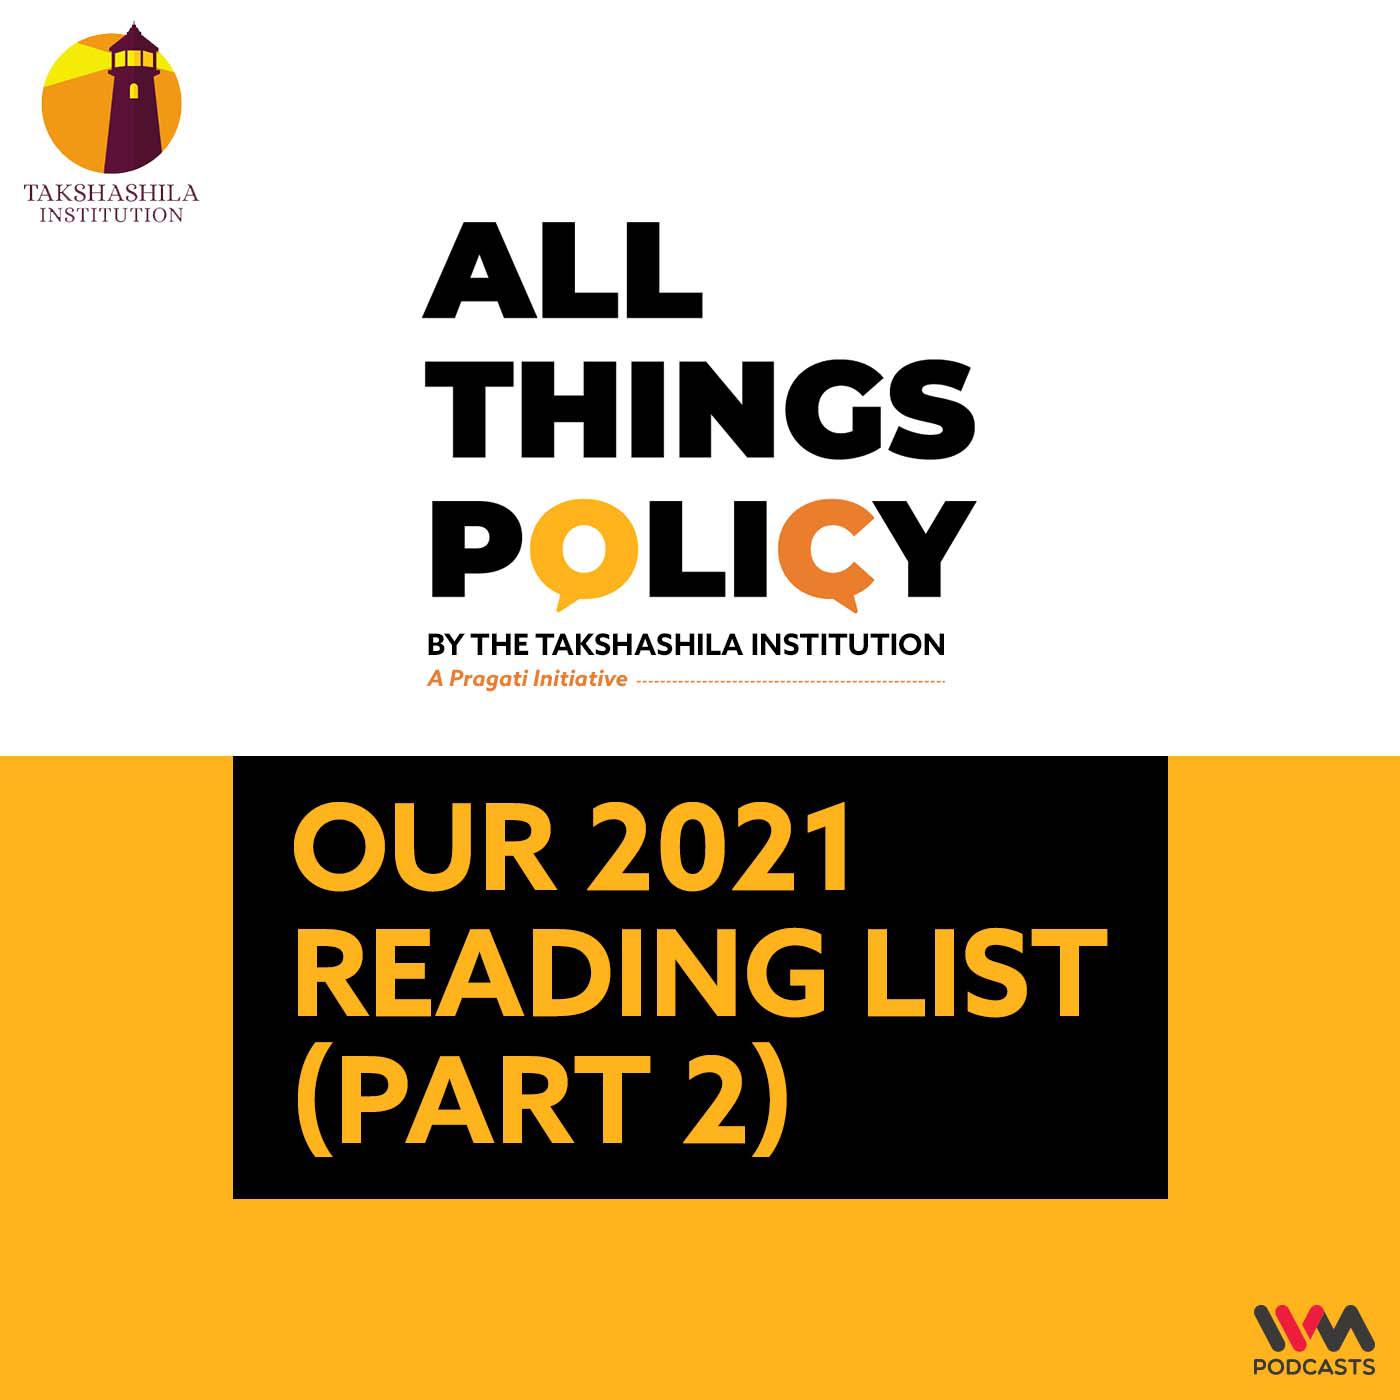 Our 2021 Reading List (Part 2)